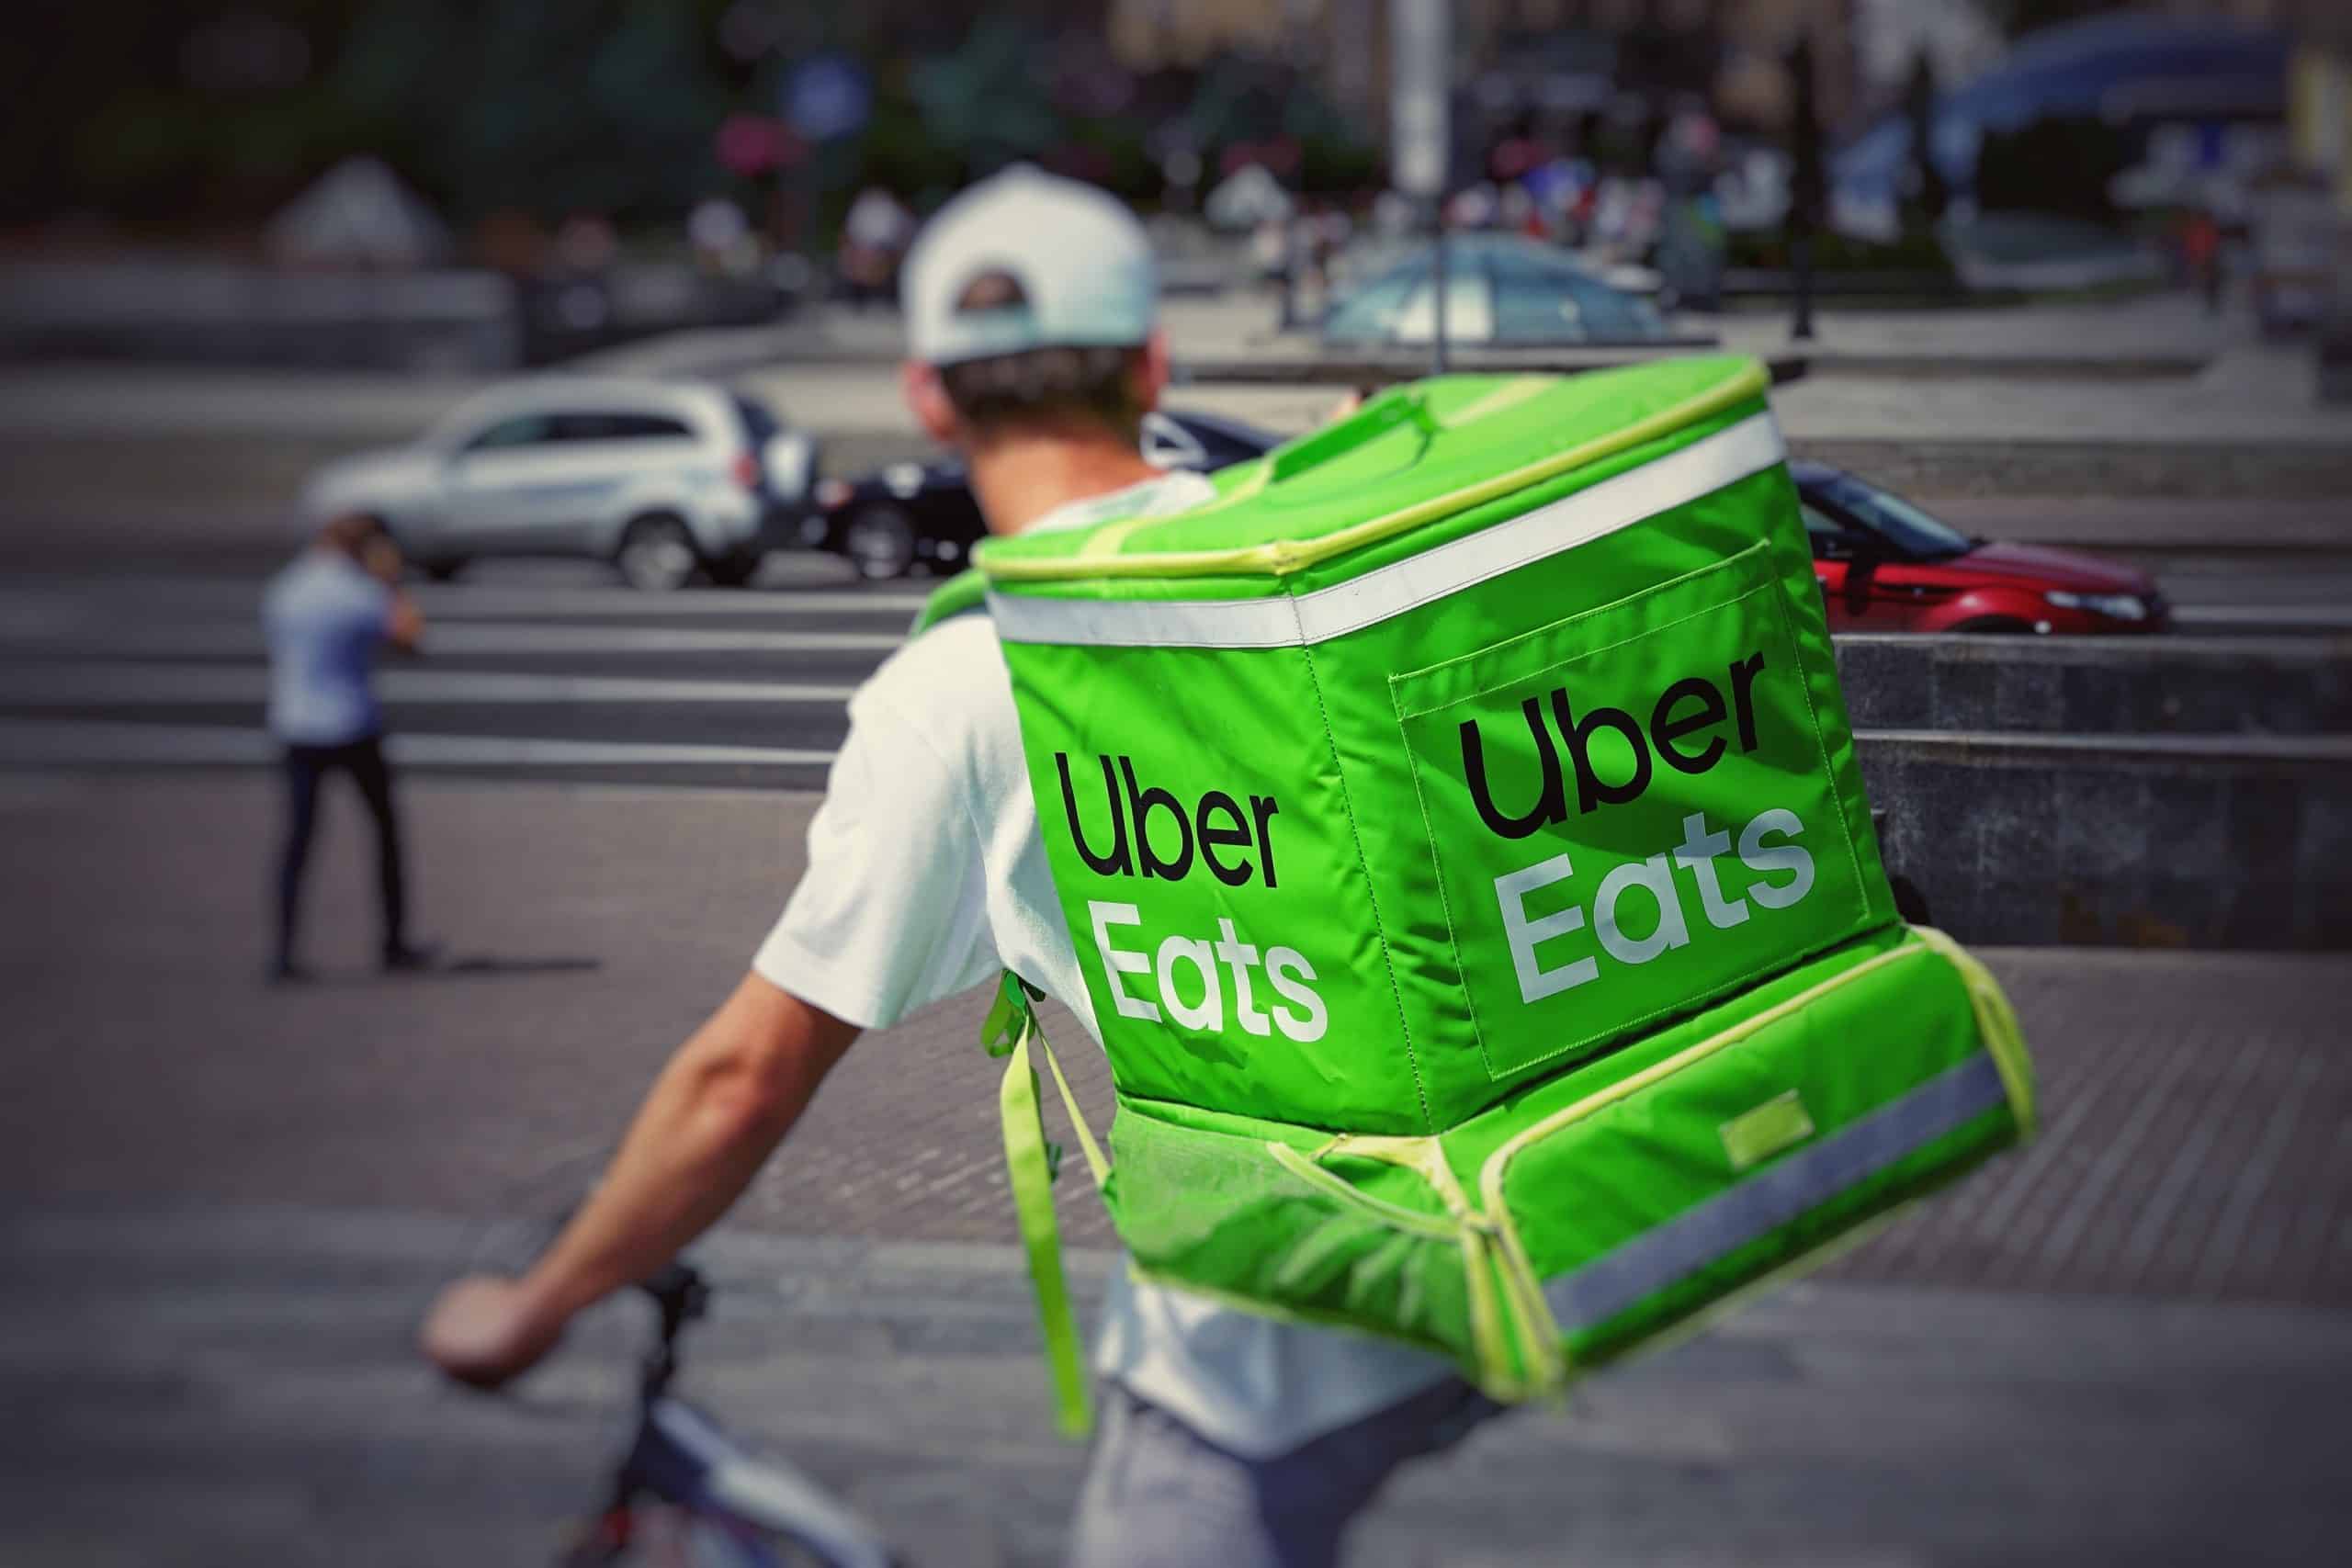 Uber Eats "dine-in"